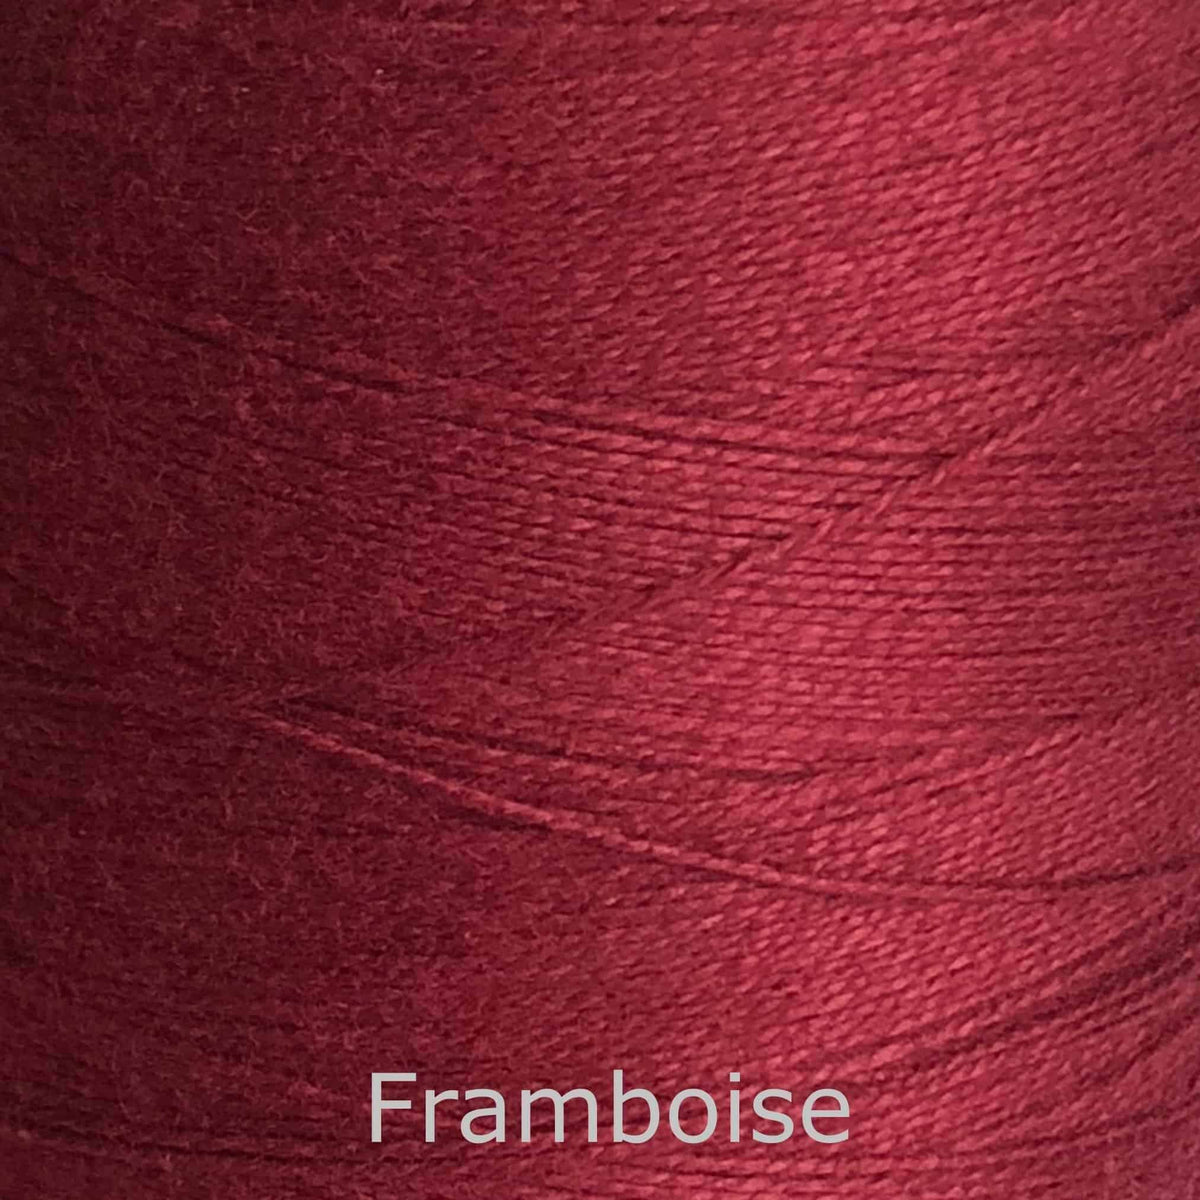 16/2 cotton weaving yarn framboise